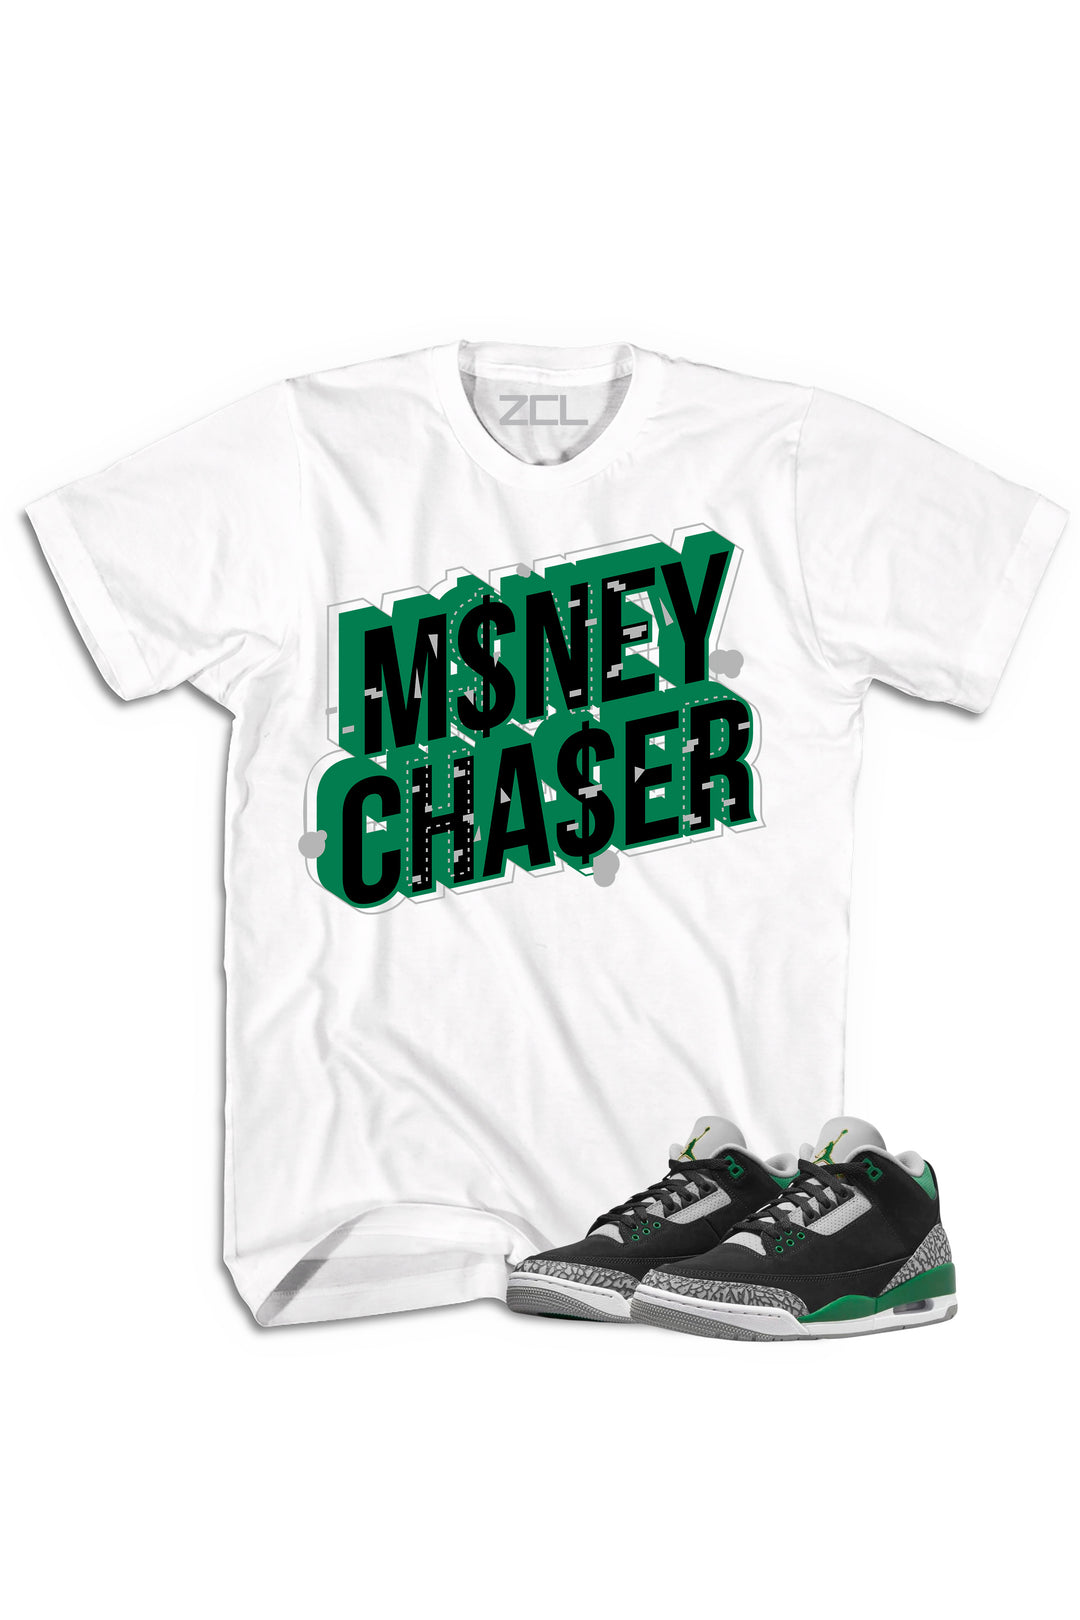 Air Jordan 3 "Money Chaser" Tee Pine Green - Zamage